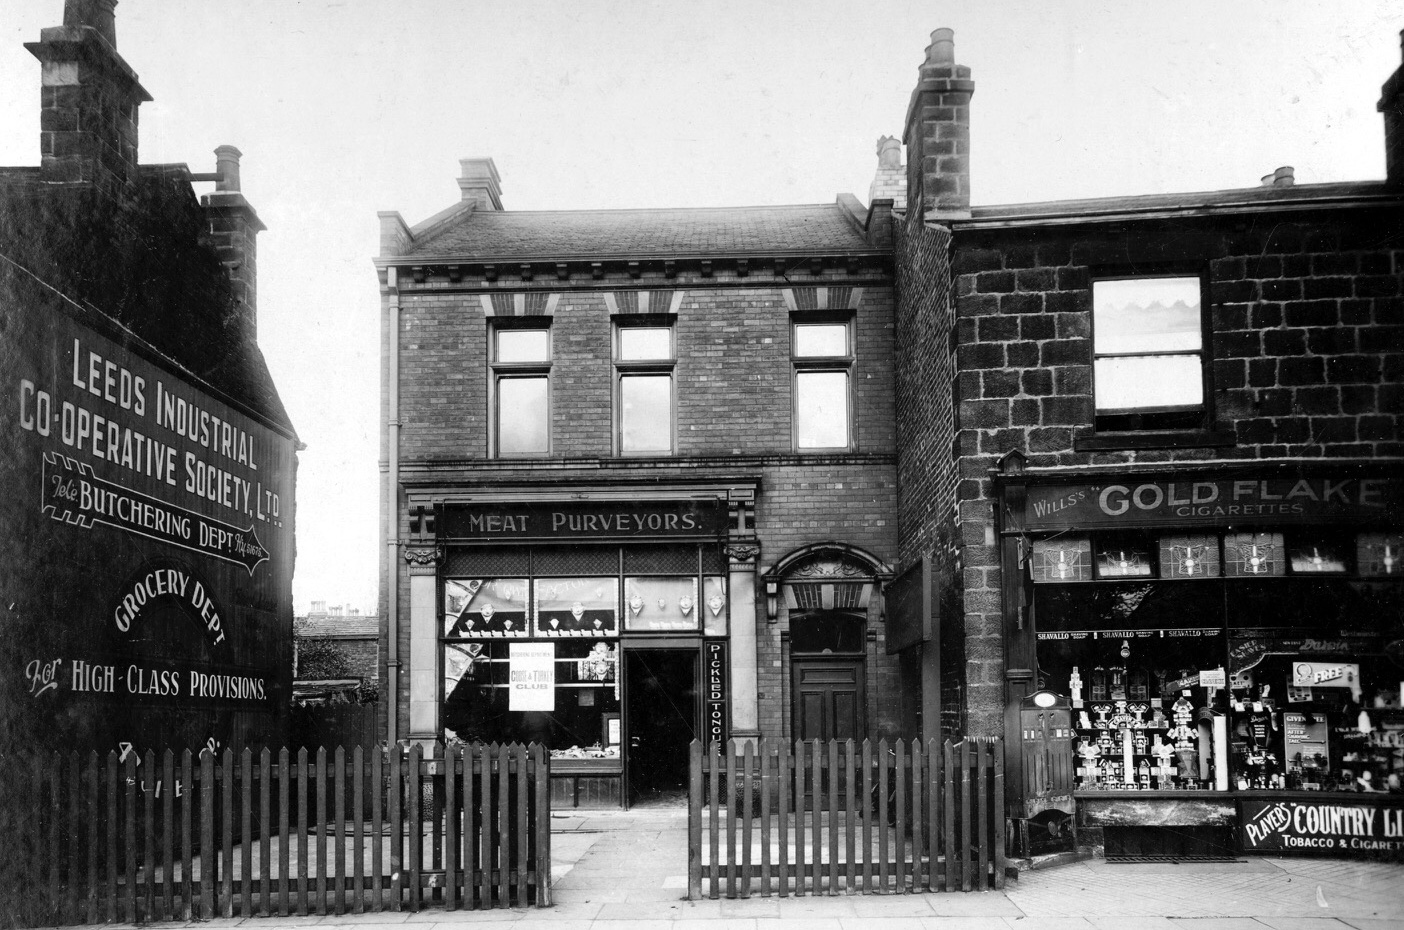 Butchering Dept, Leeds Industrial Co-operative Society Ltd (demolished),  North Lane, 1931